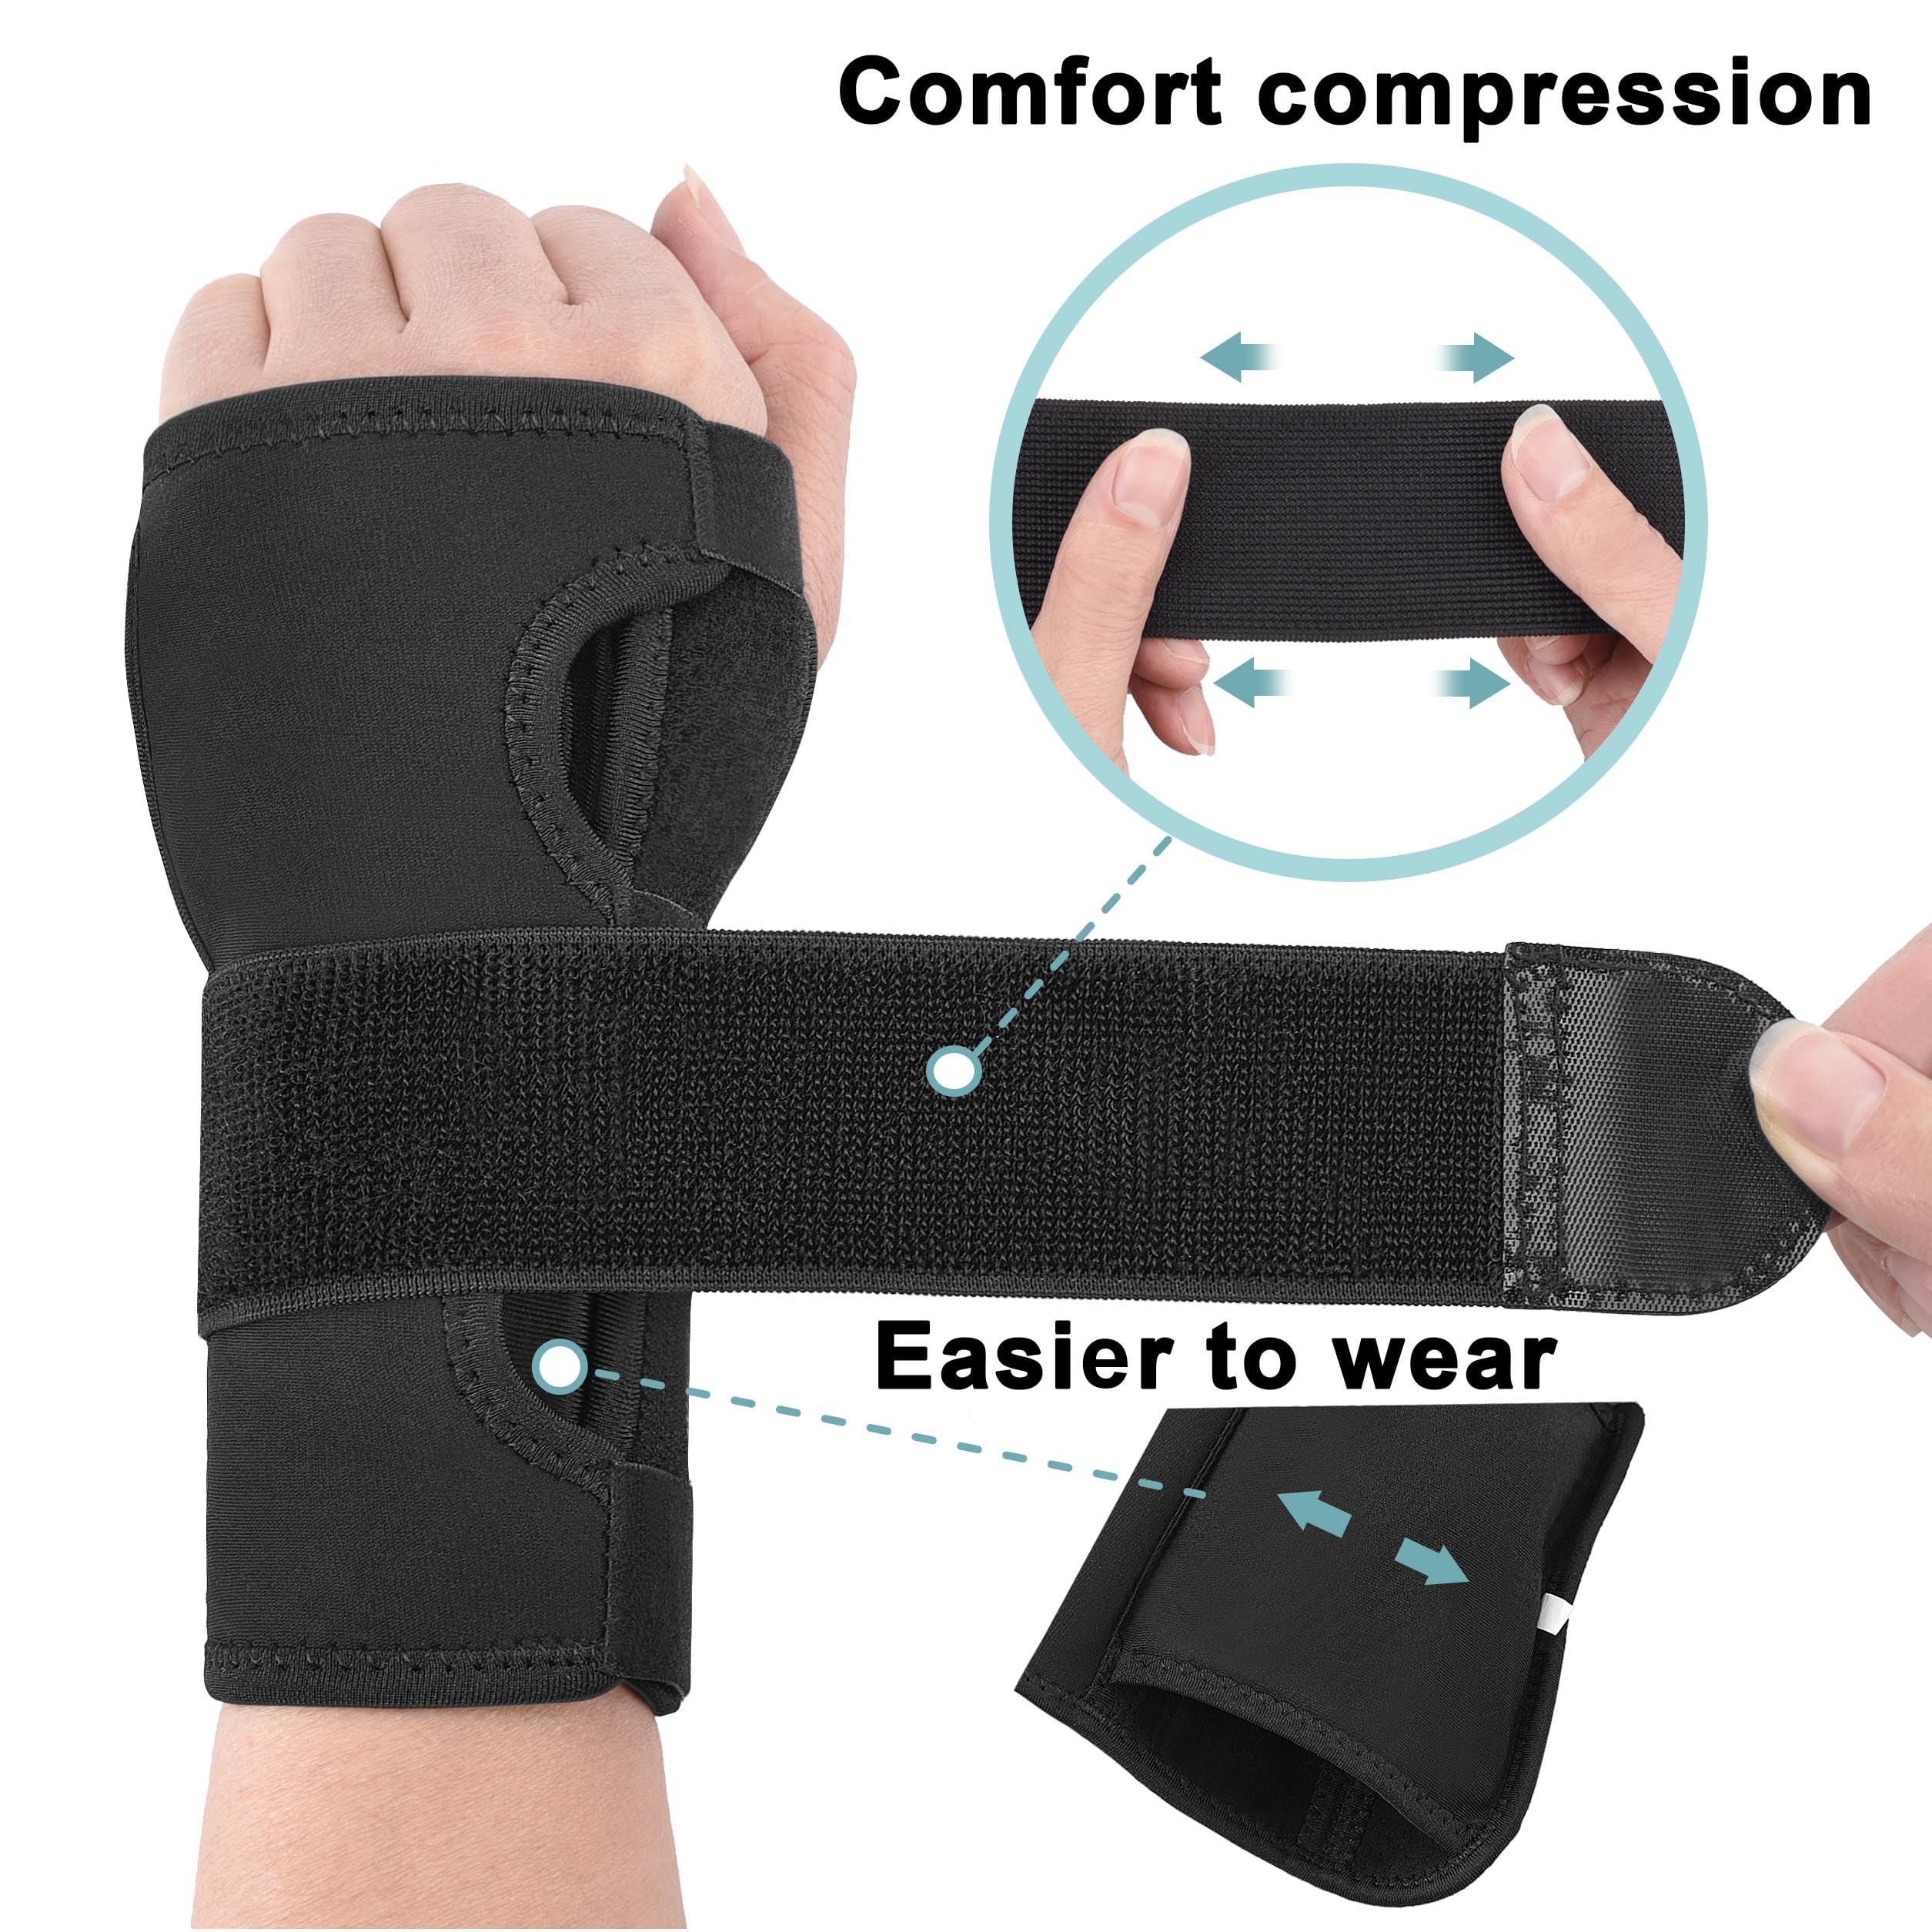 Wrist Brace,Wrist Splint,Hand Brace,Carpal Tunnel Wrist Brace Night Support with Removable Pads,Helps Relieve Tendinitis Arthritis Carpal Tunnel Pain